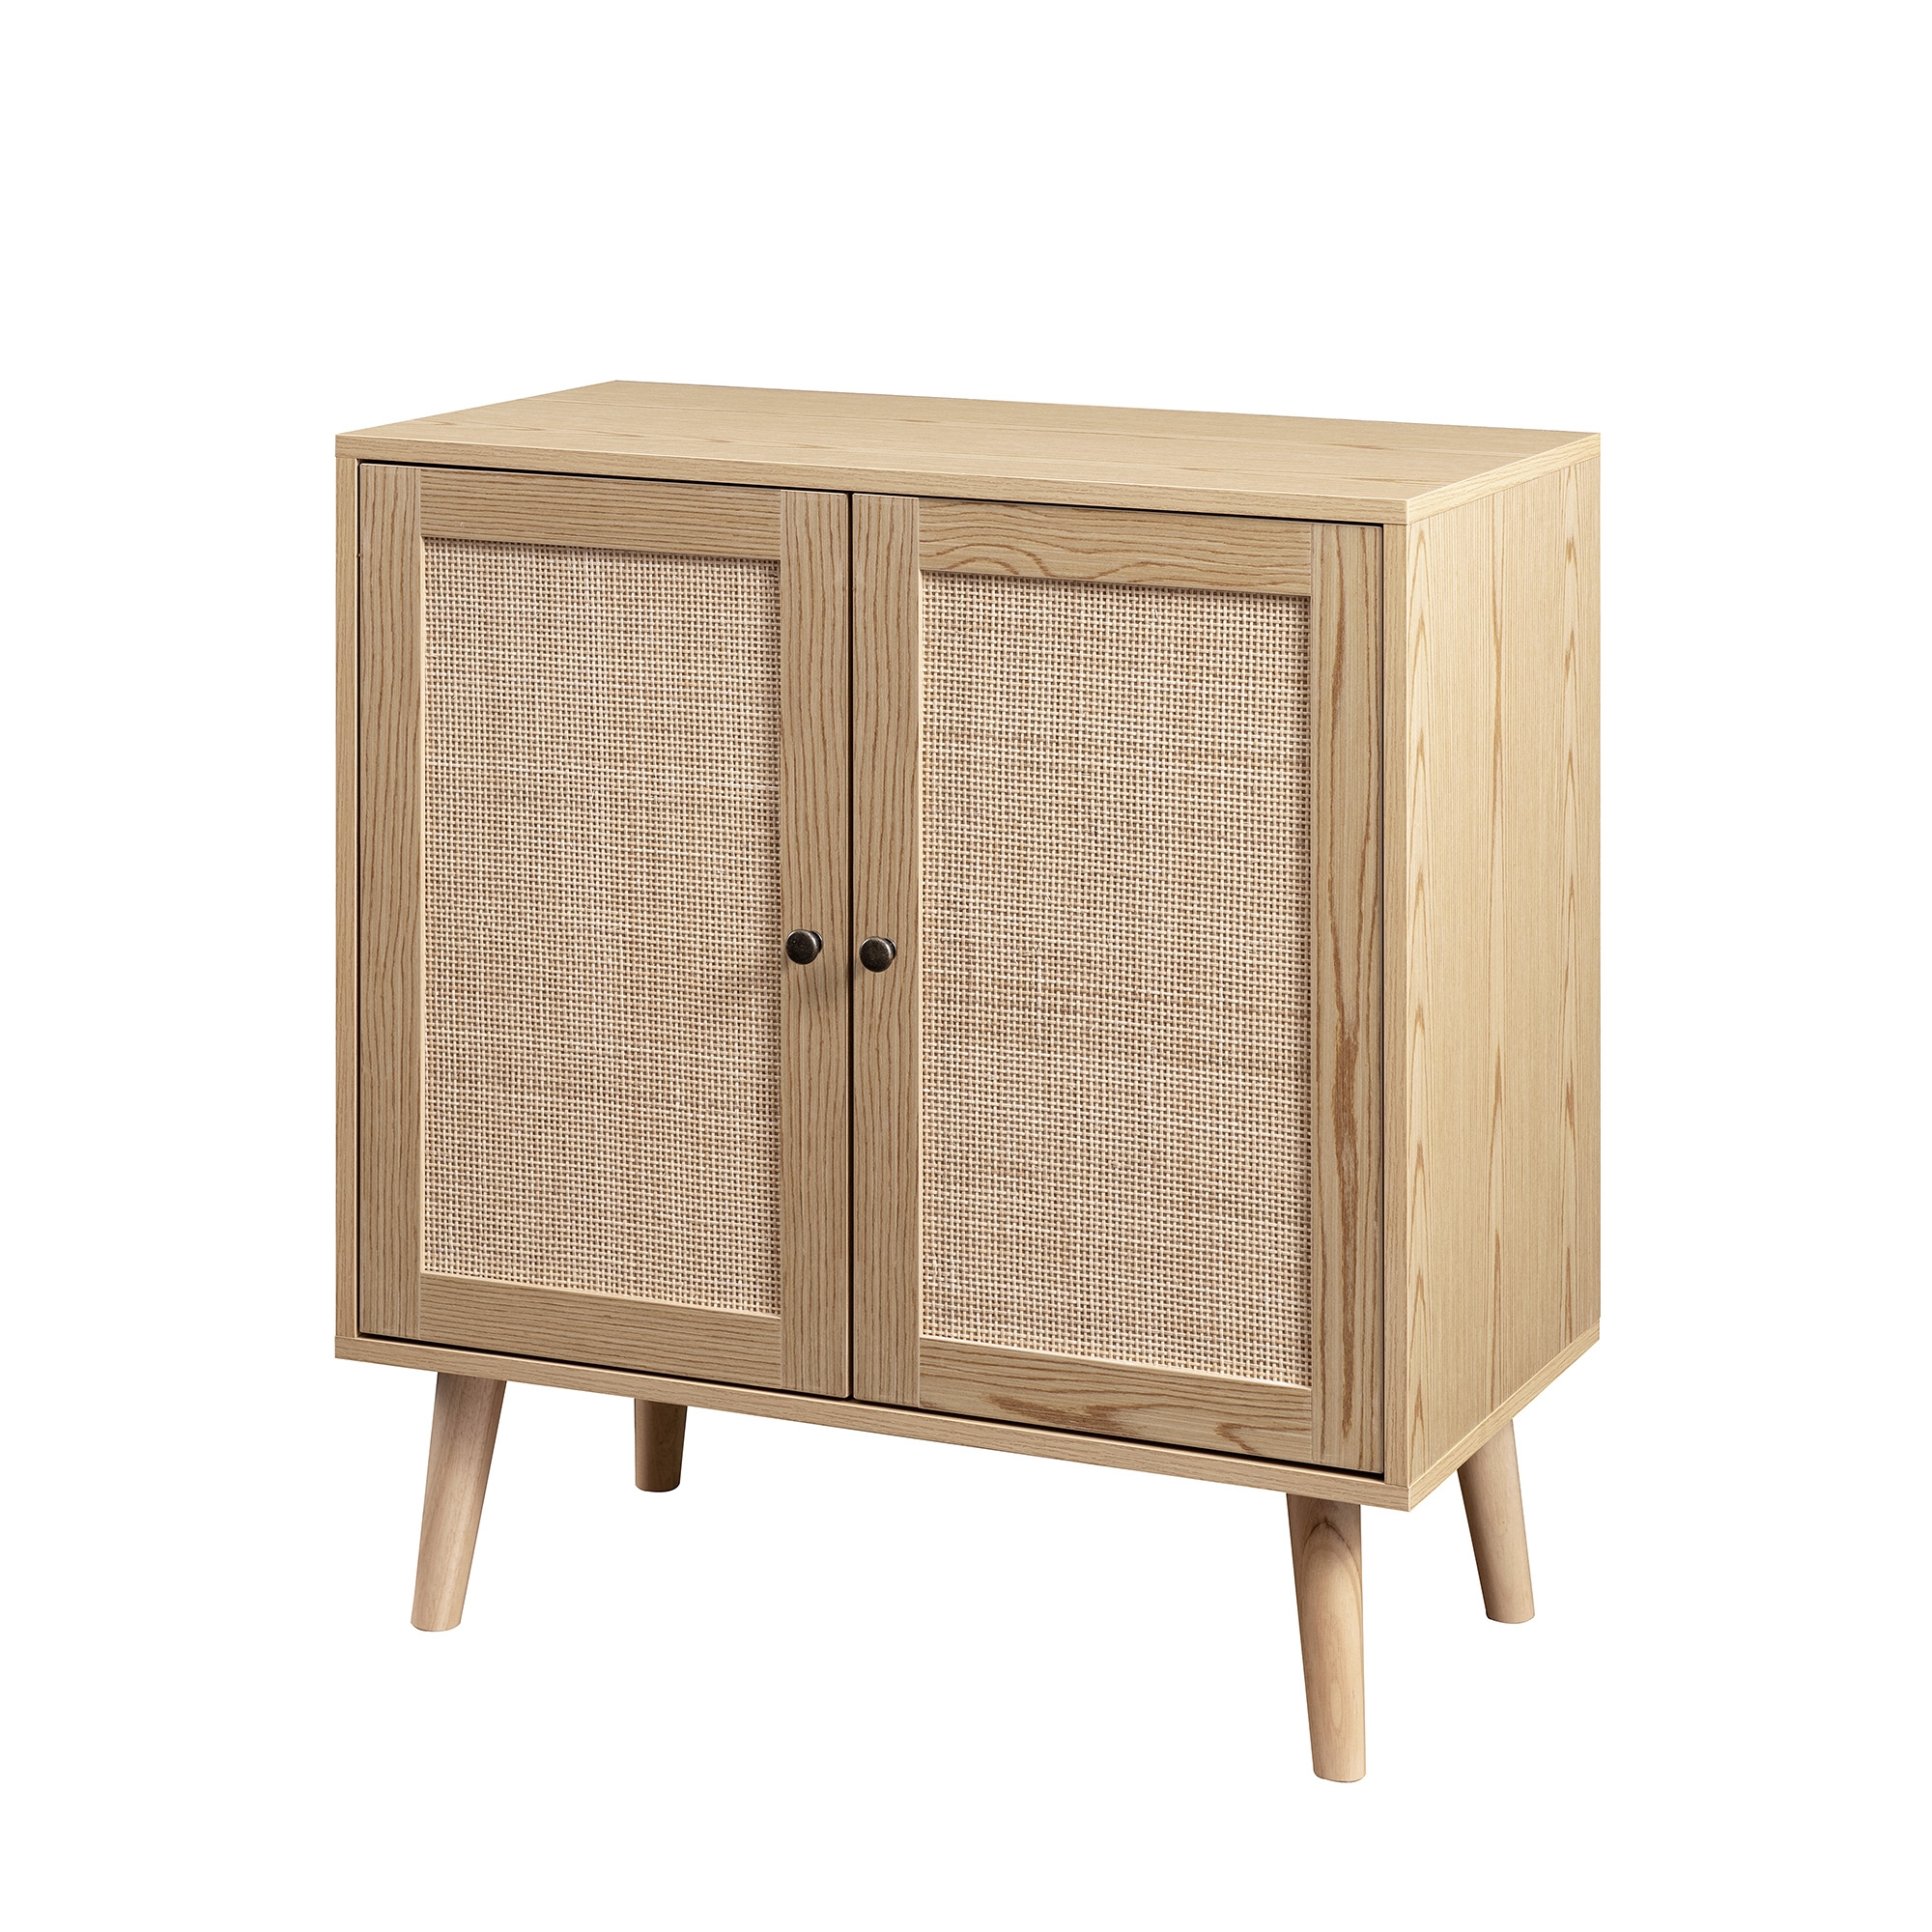 30" Wood and Rattan 2-Door Accent Cabinet - Image 2